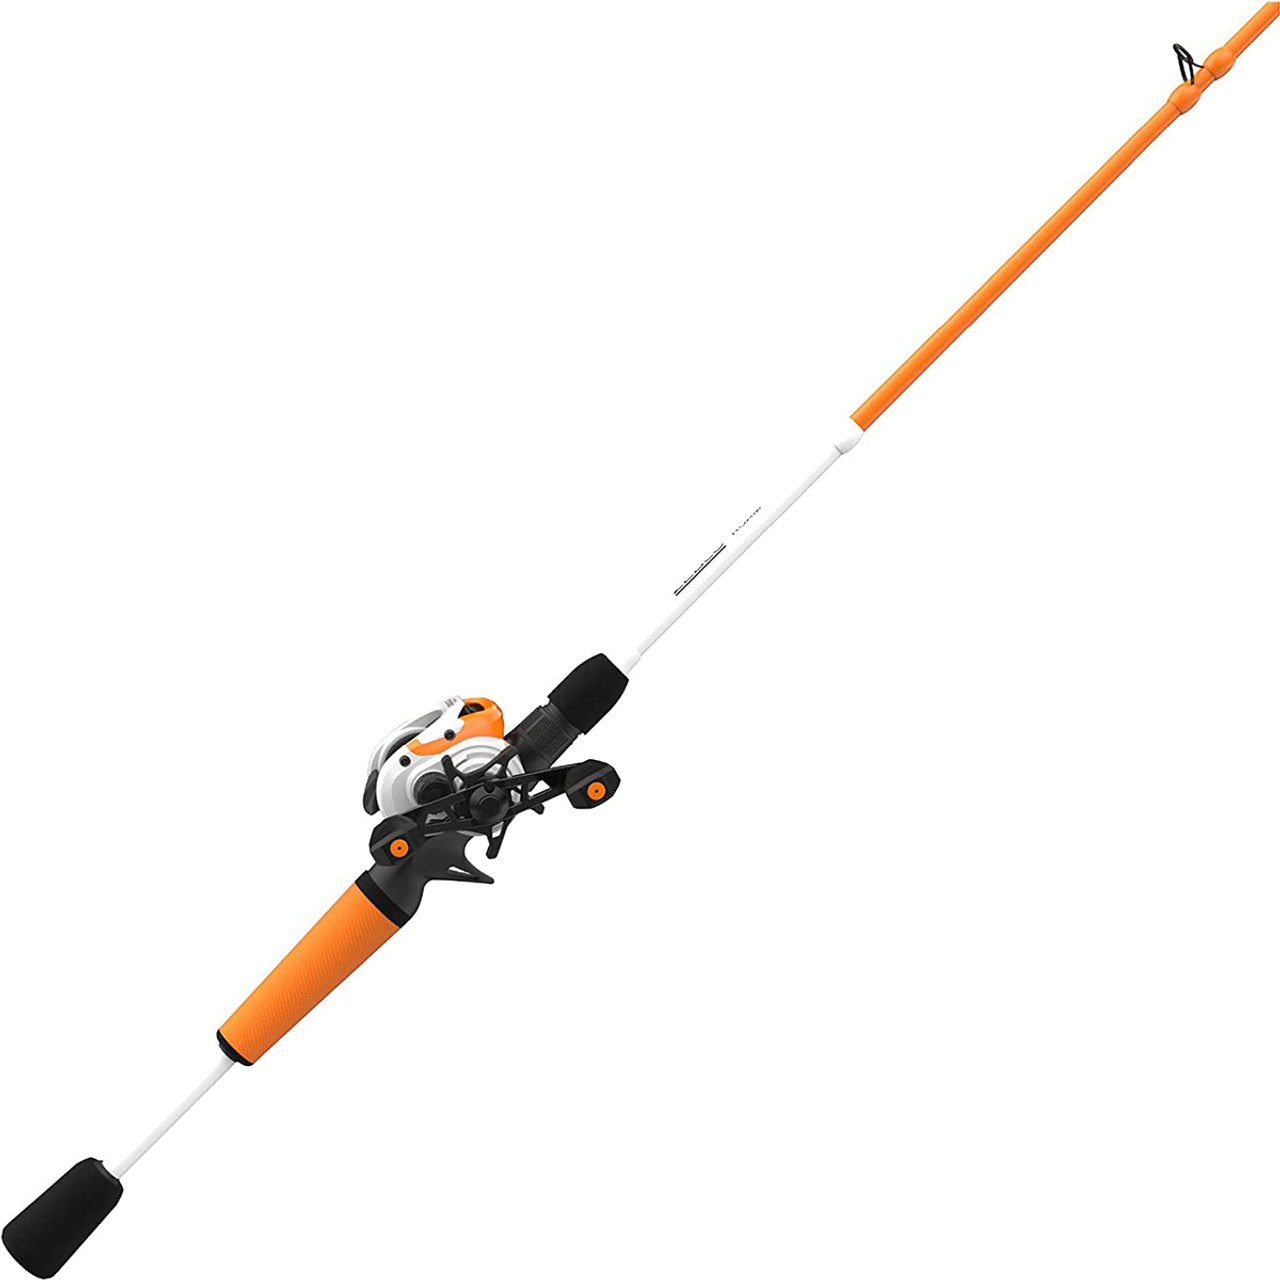  Zebco Roam Spincast Reel And Fishing Rod Combo, 6